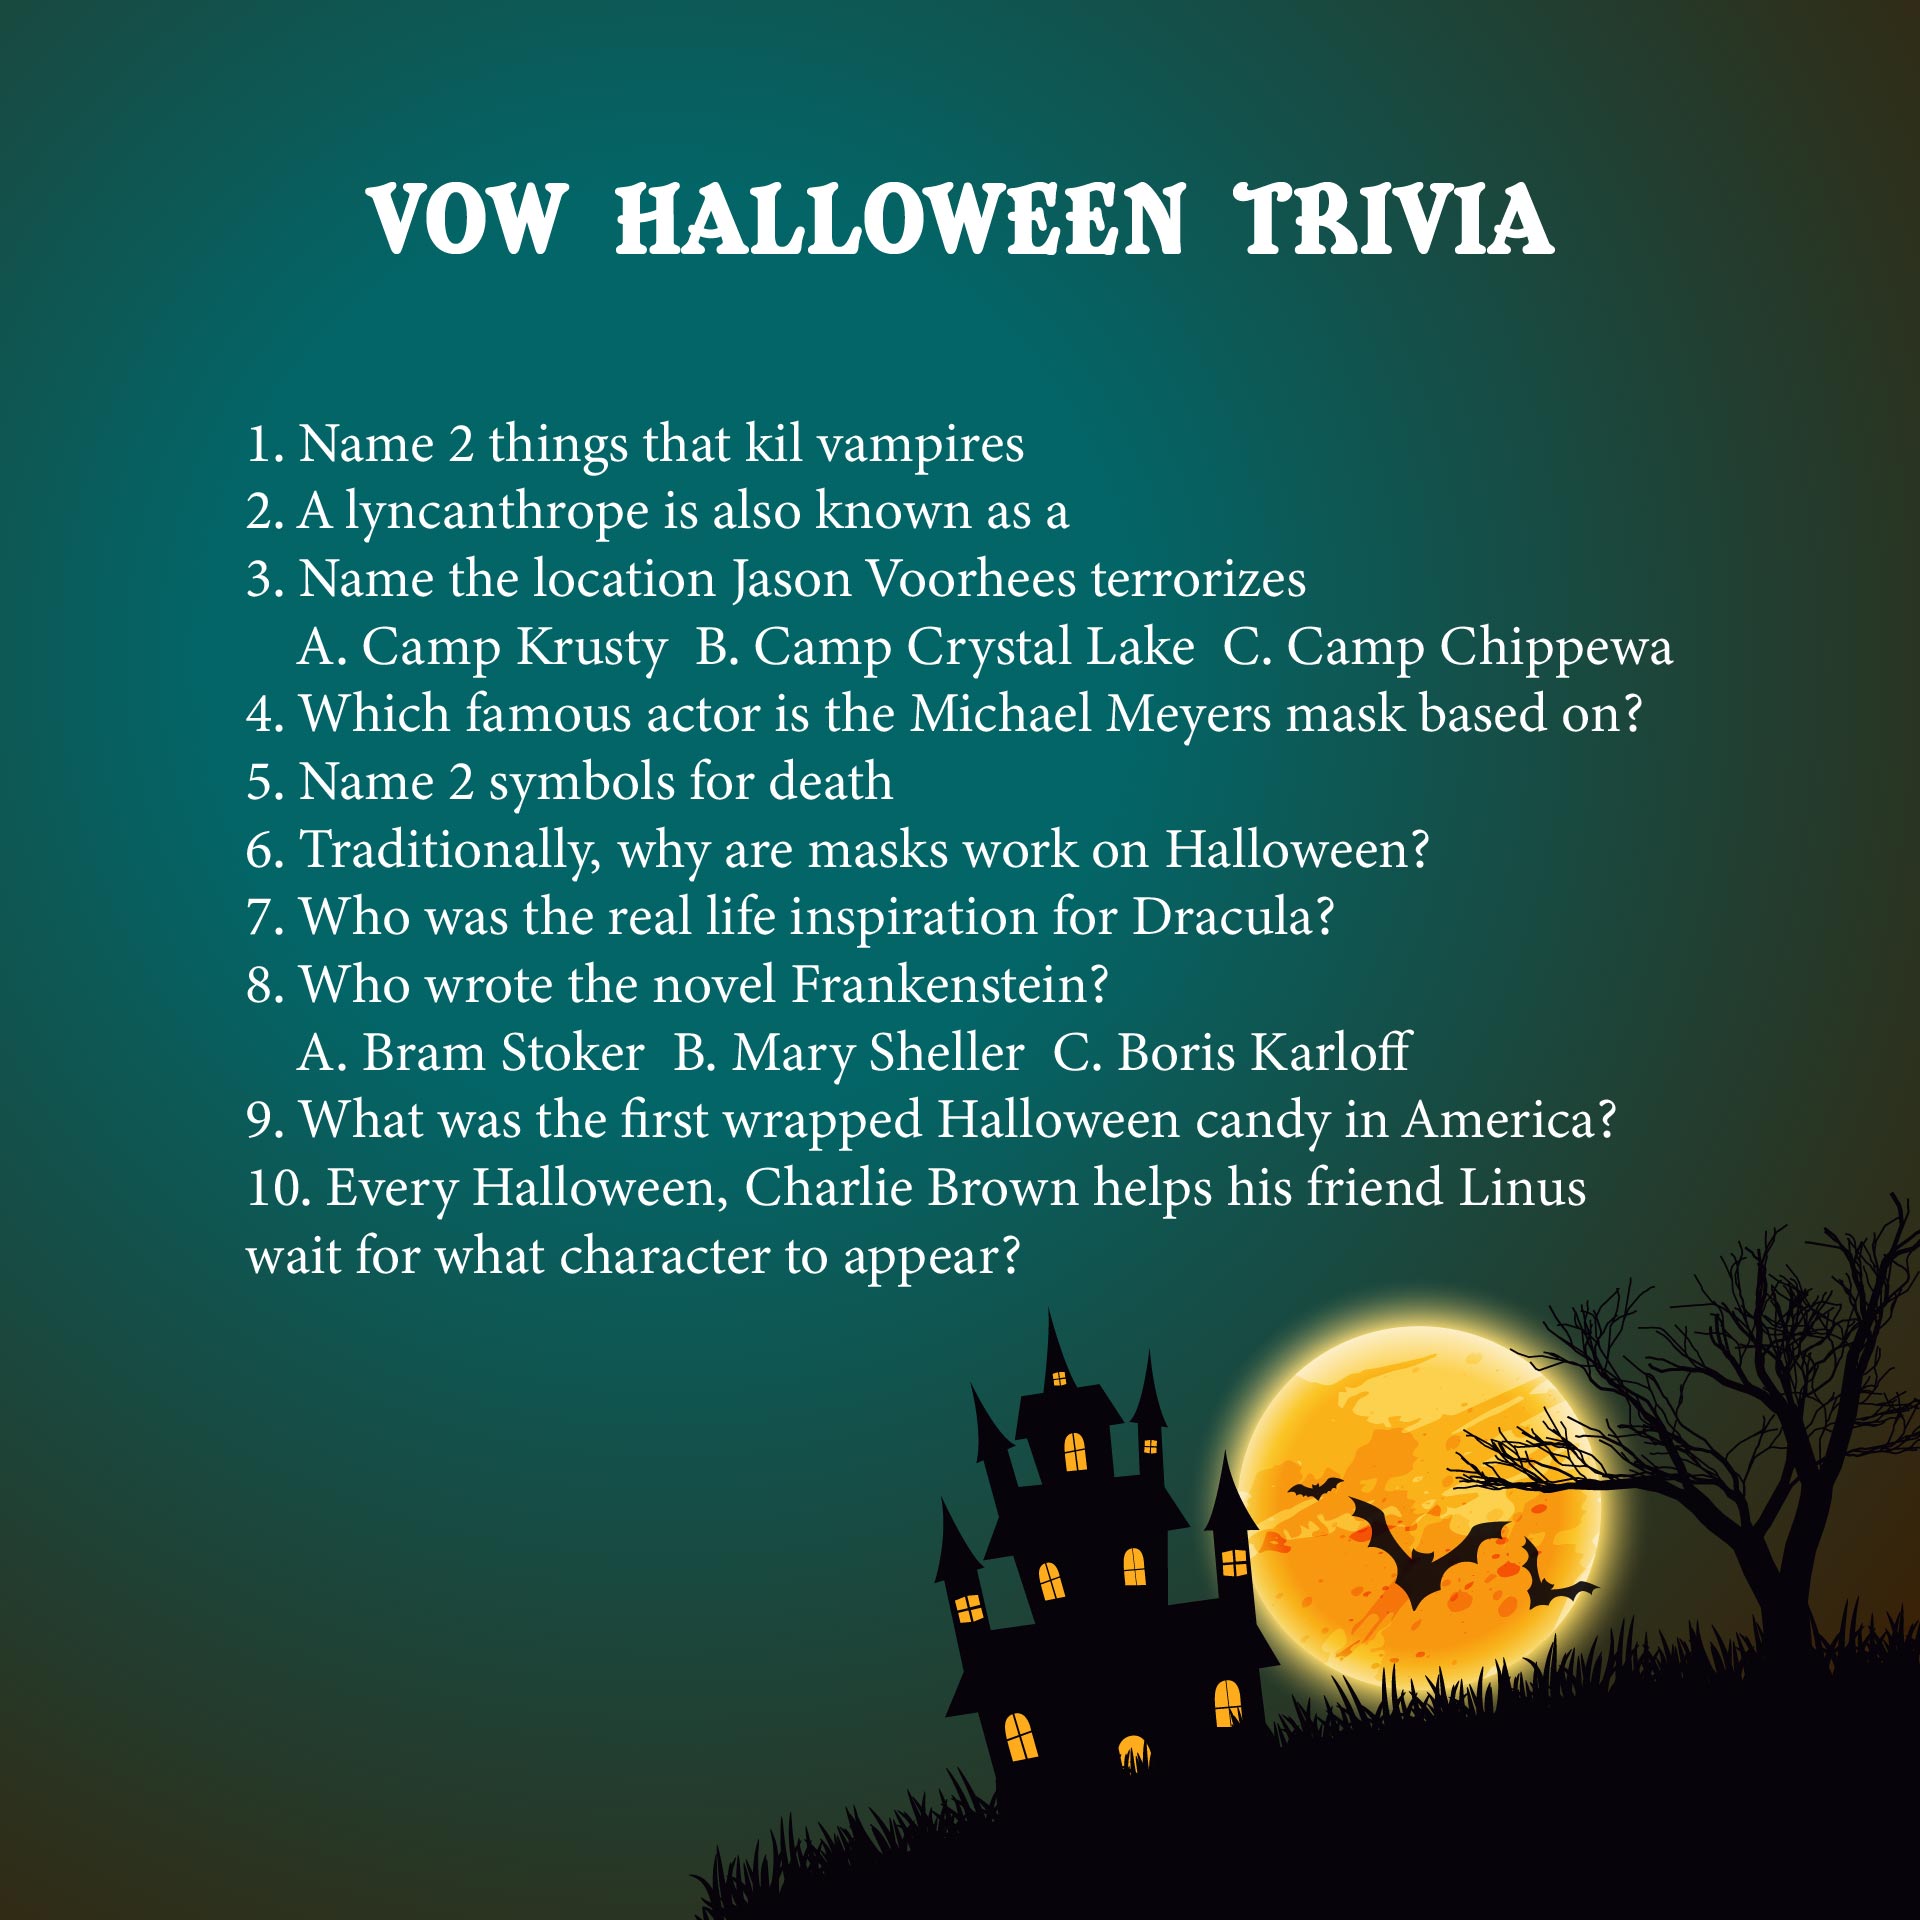 Printable Halloween Trivia